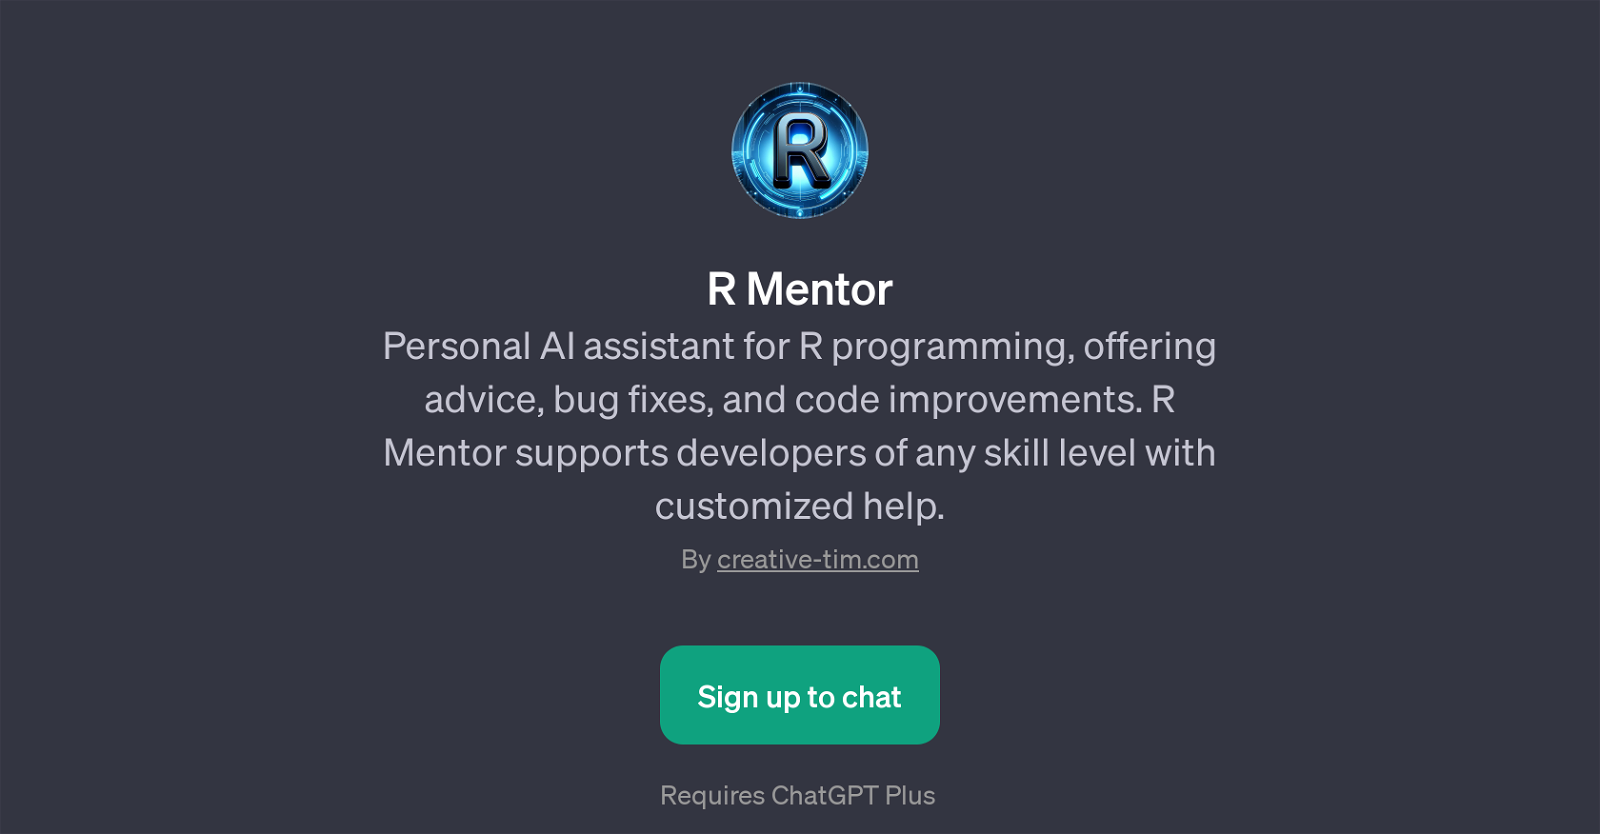 R Mentor website